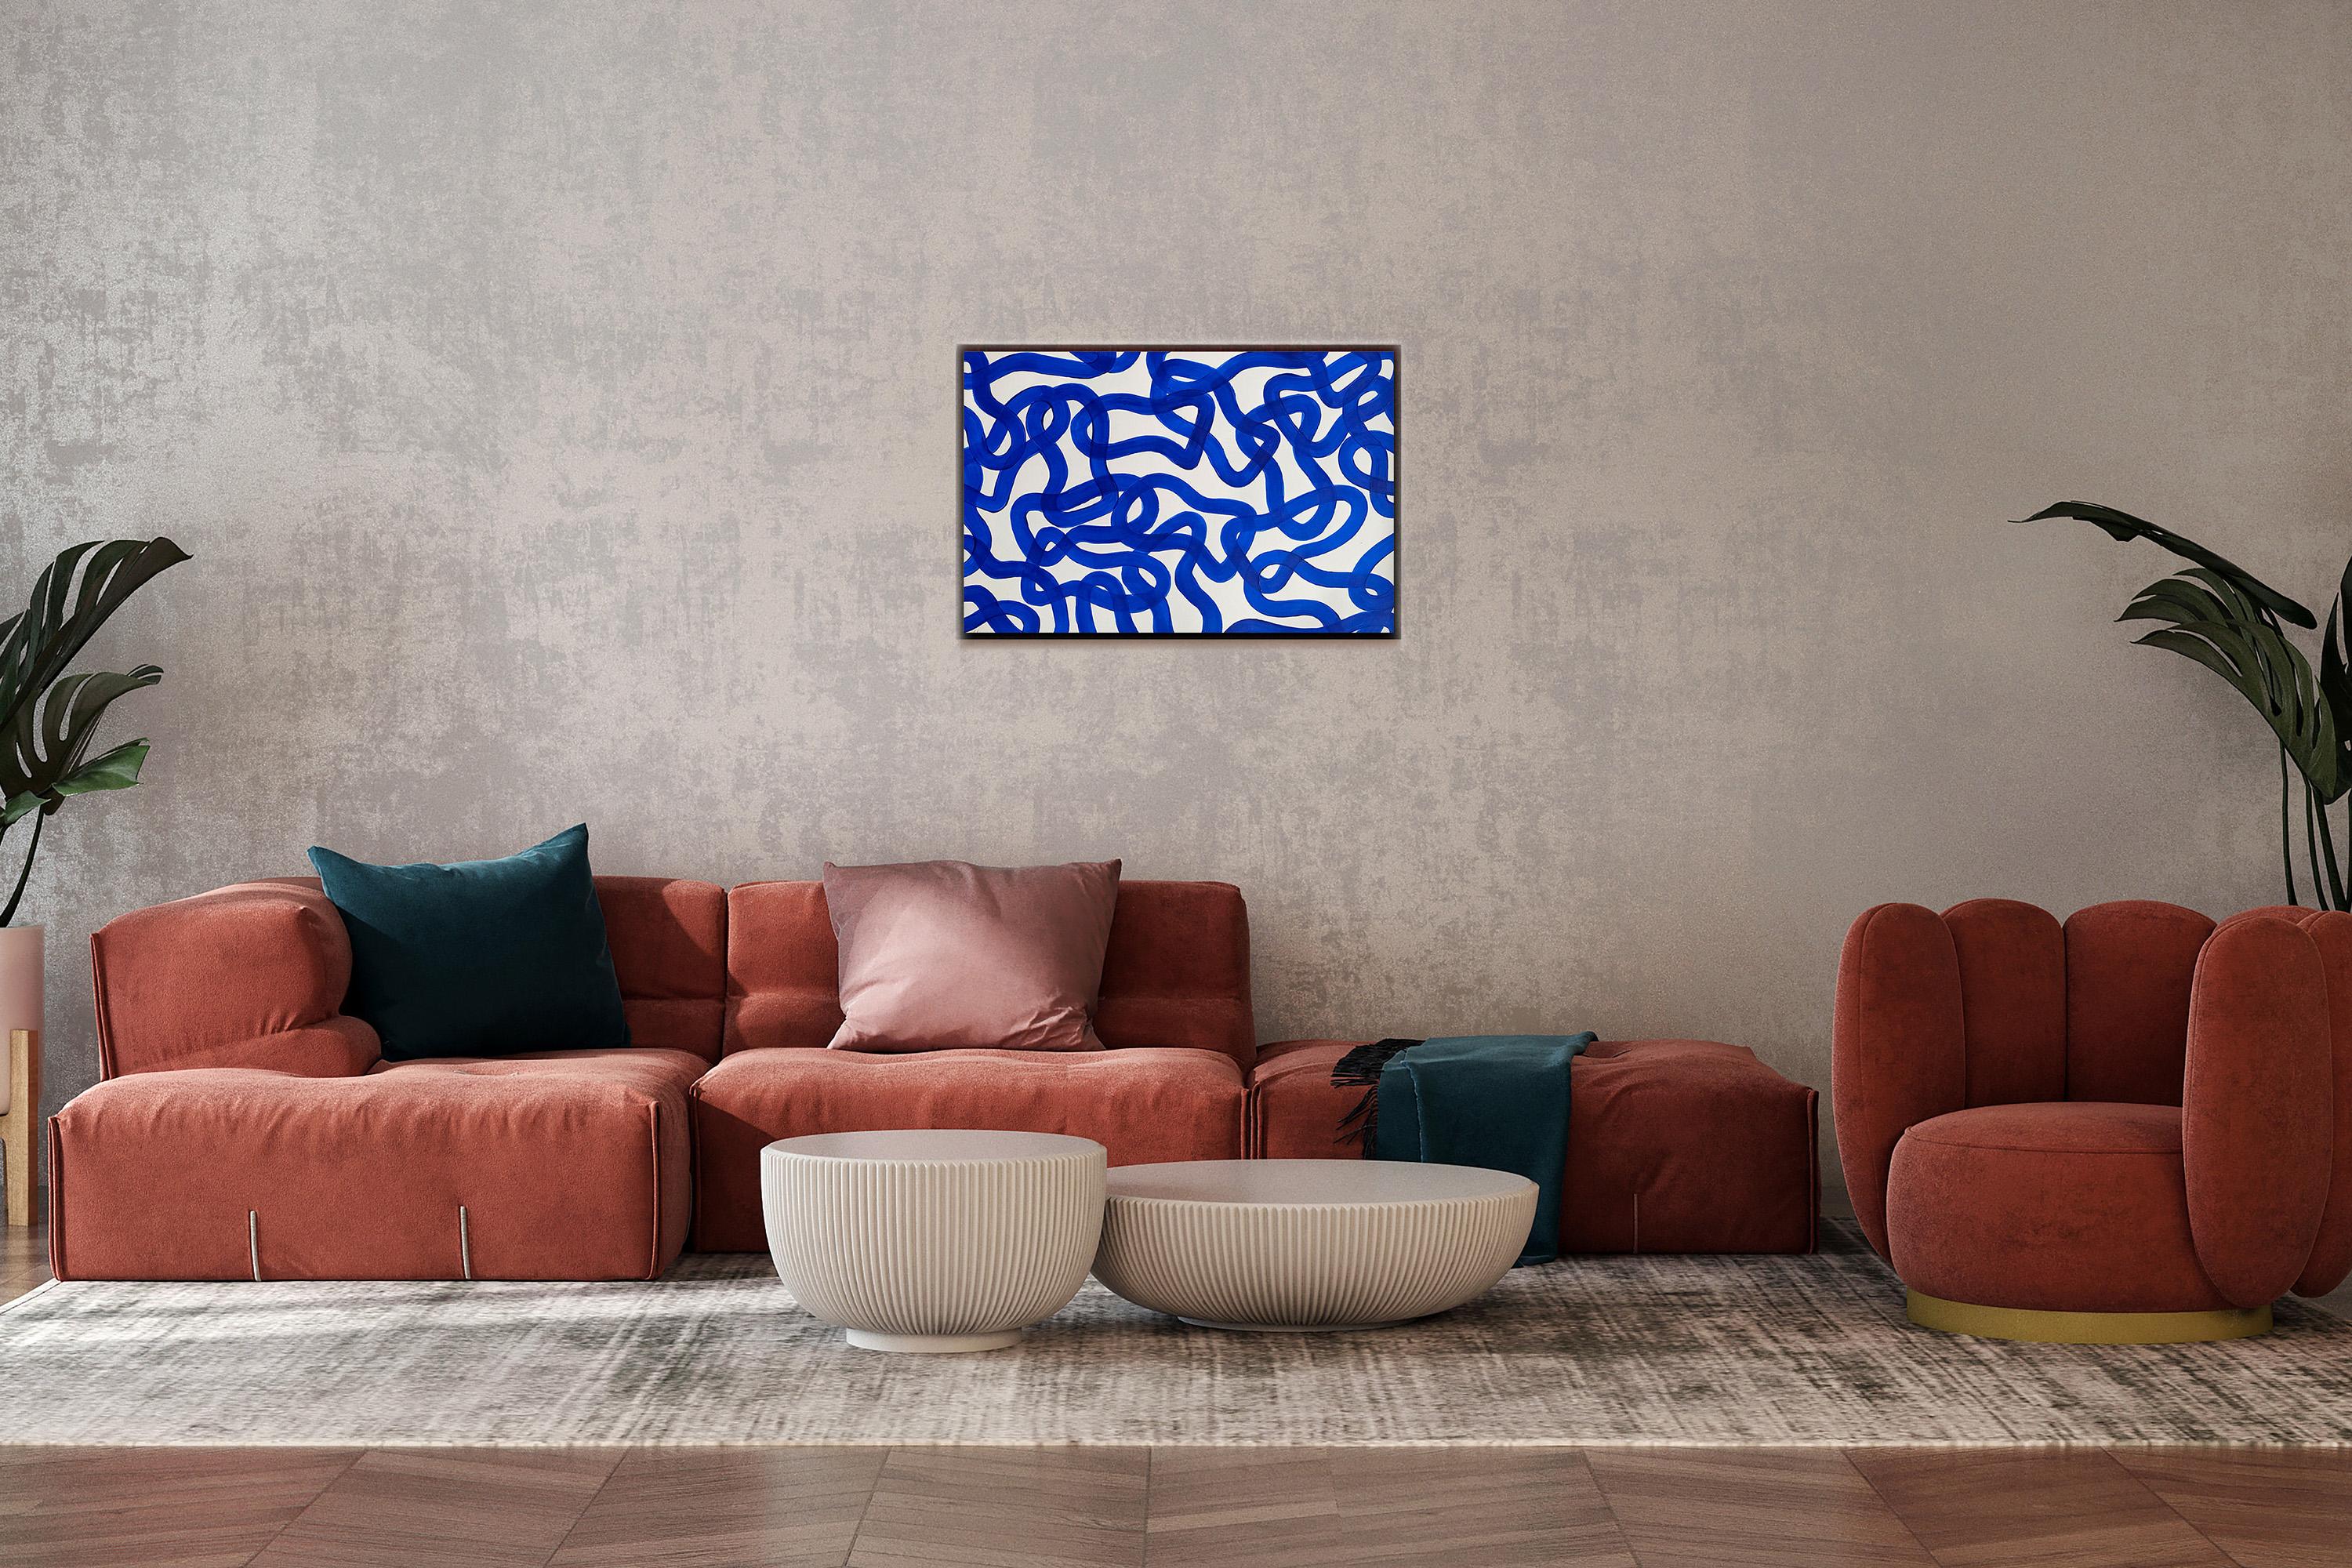 Marina, Coastal Painting of Abstract Fish Patterns, White and Blue Brushstrokes 1